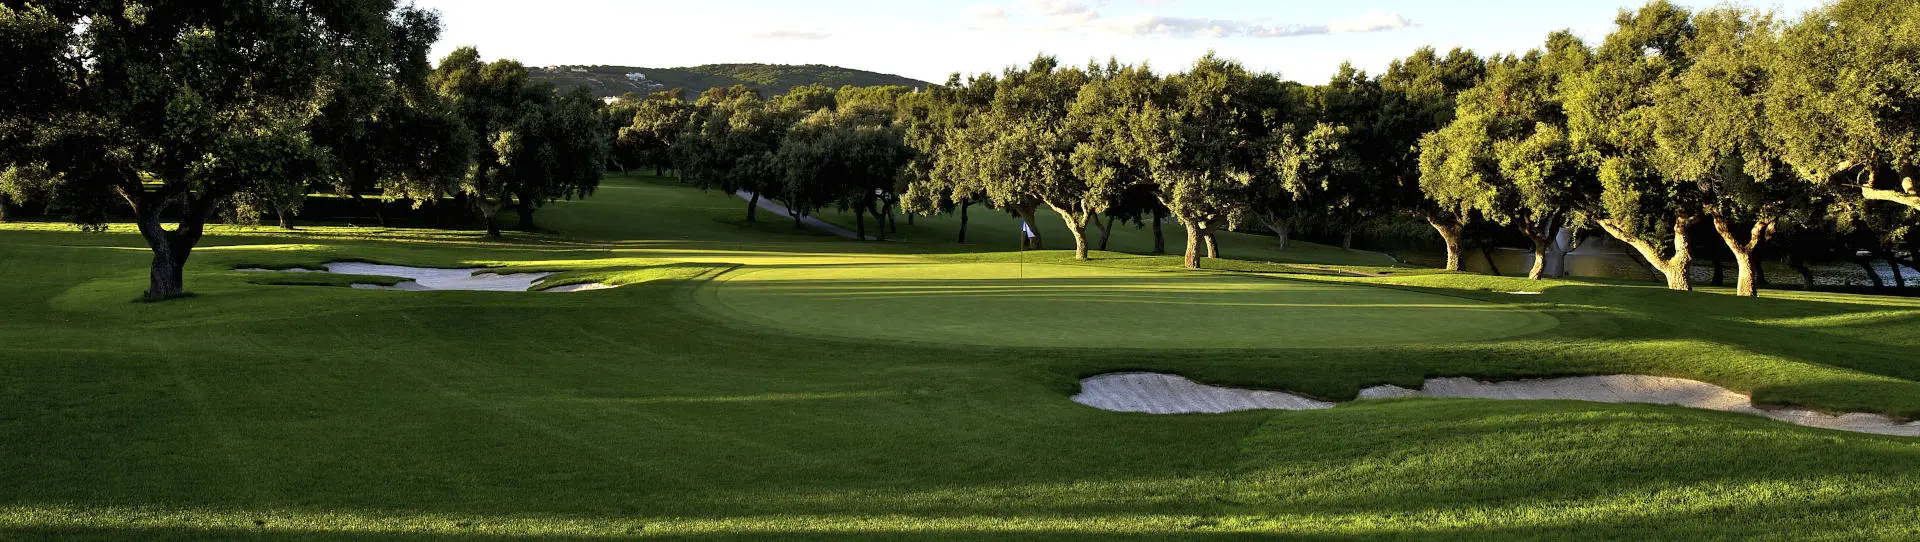 Spain golf holidays - Spain Finest Golf Pack 2 - Photo 3